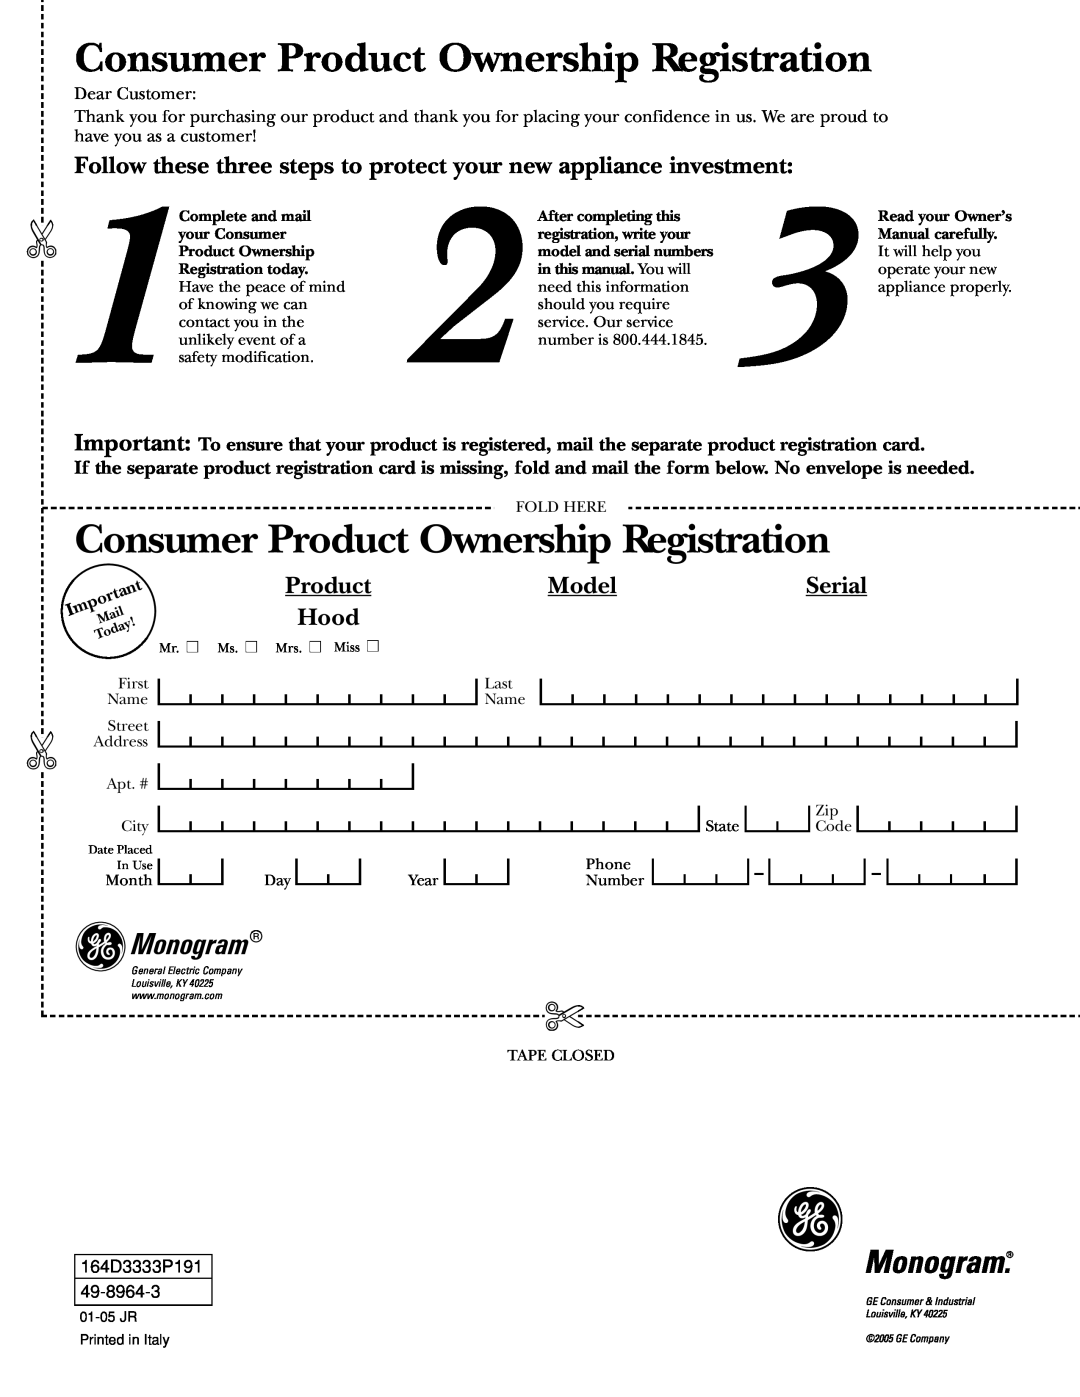 GE Monogram ZV750 owner manual Consumer Product Ownership Registration, Model, Hood, Monogram, Serial 